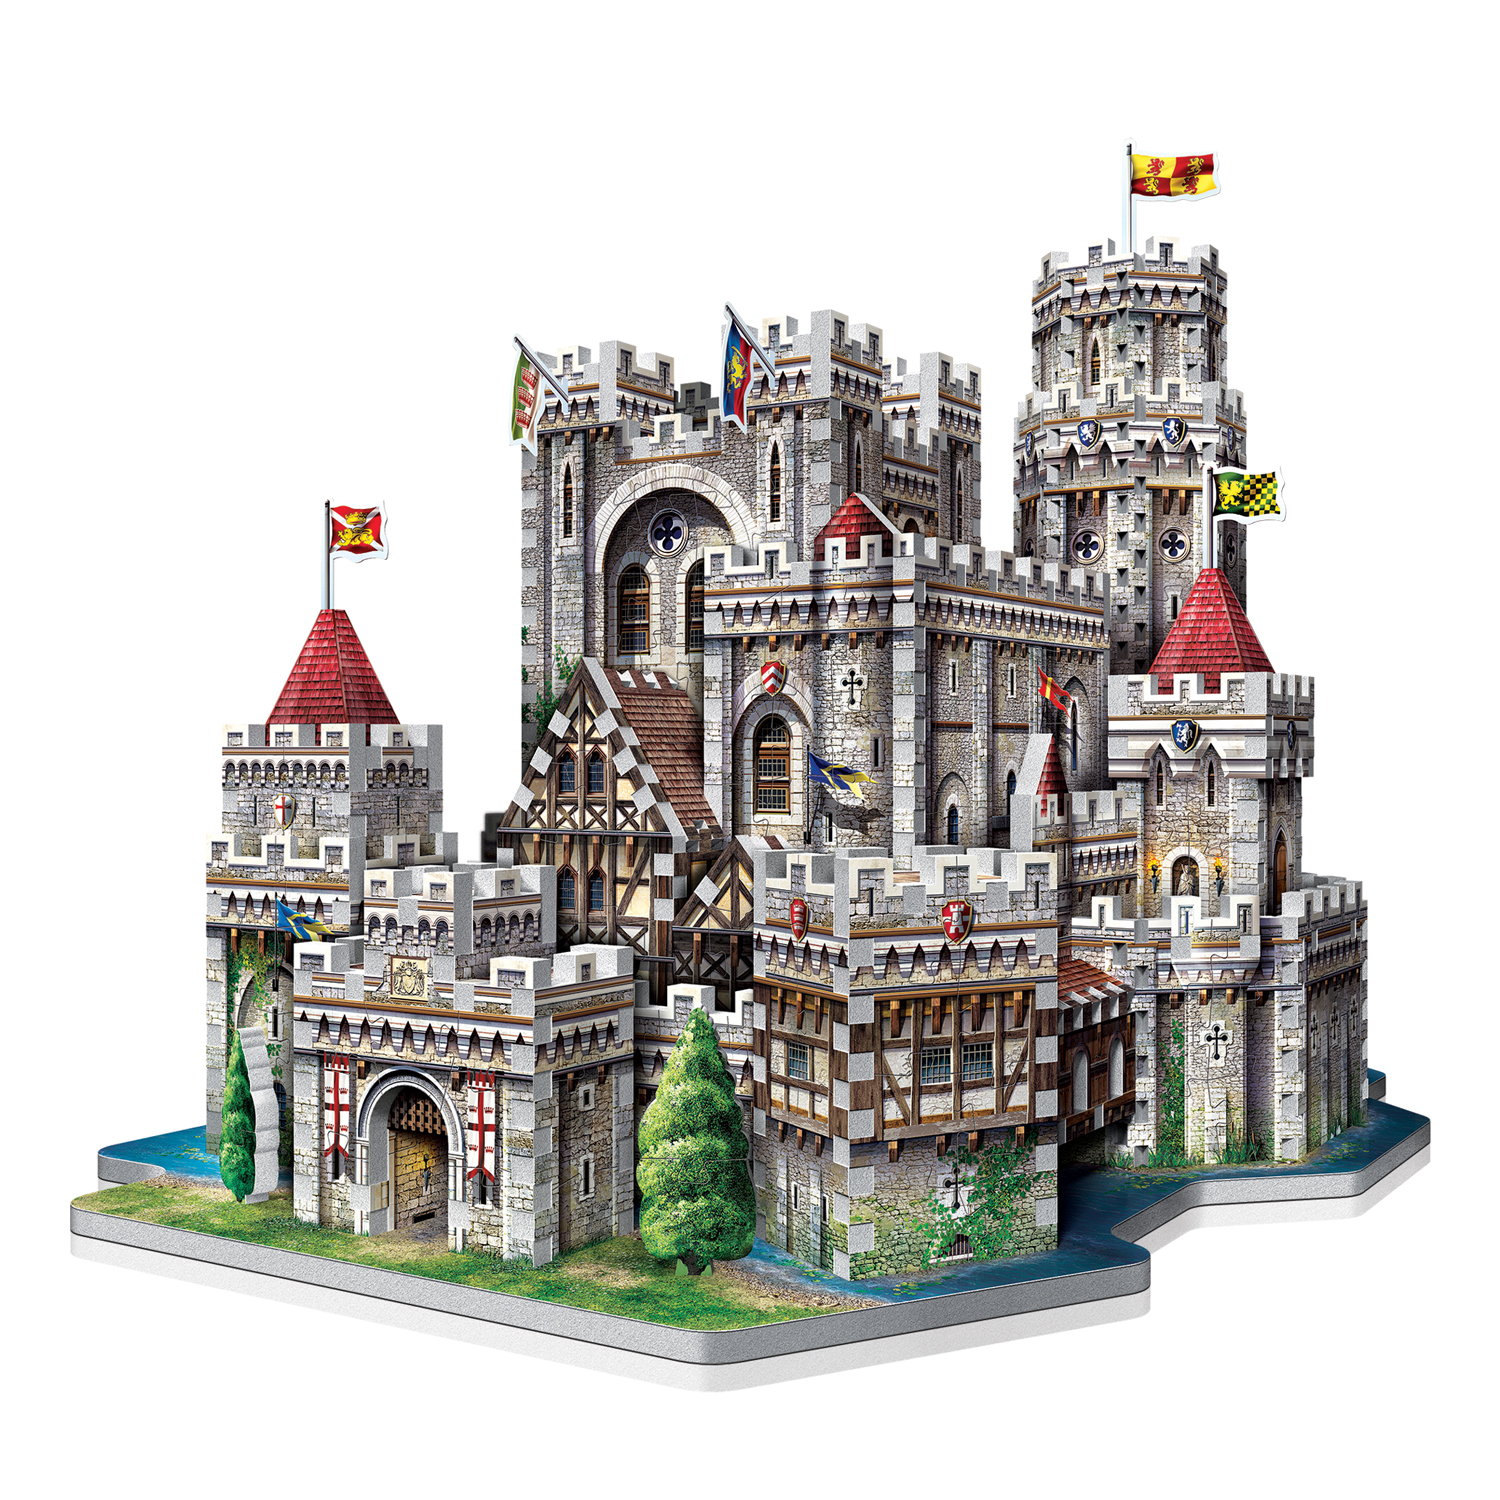 New Sealed Collectible! Wrebbit Puzz 3D Puzzle Foam King Arthur's Camelot 